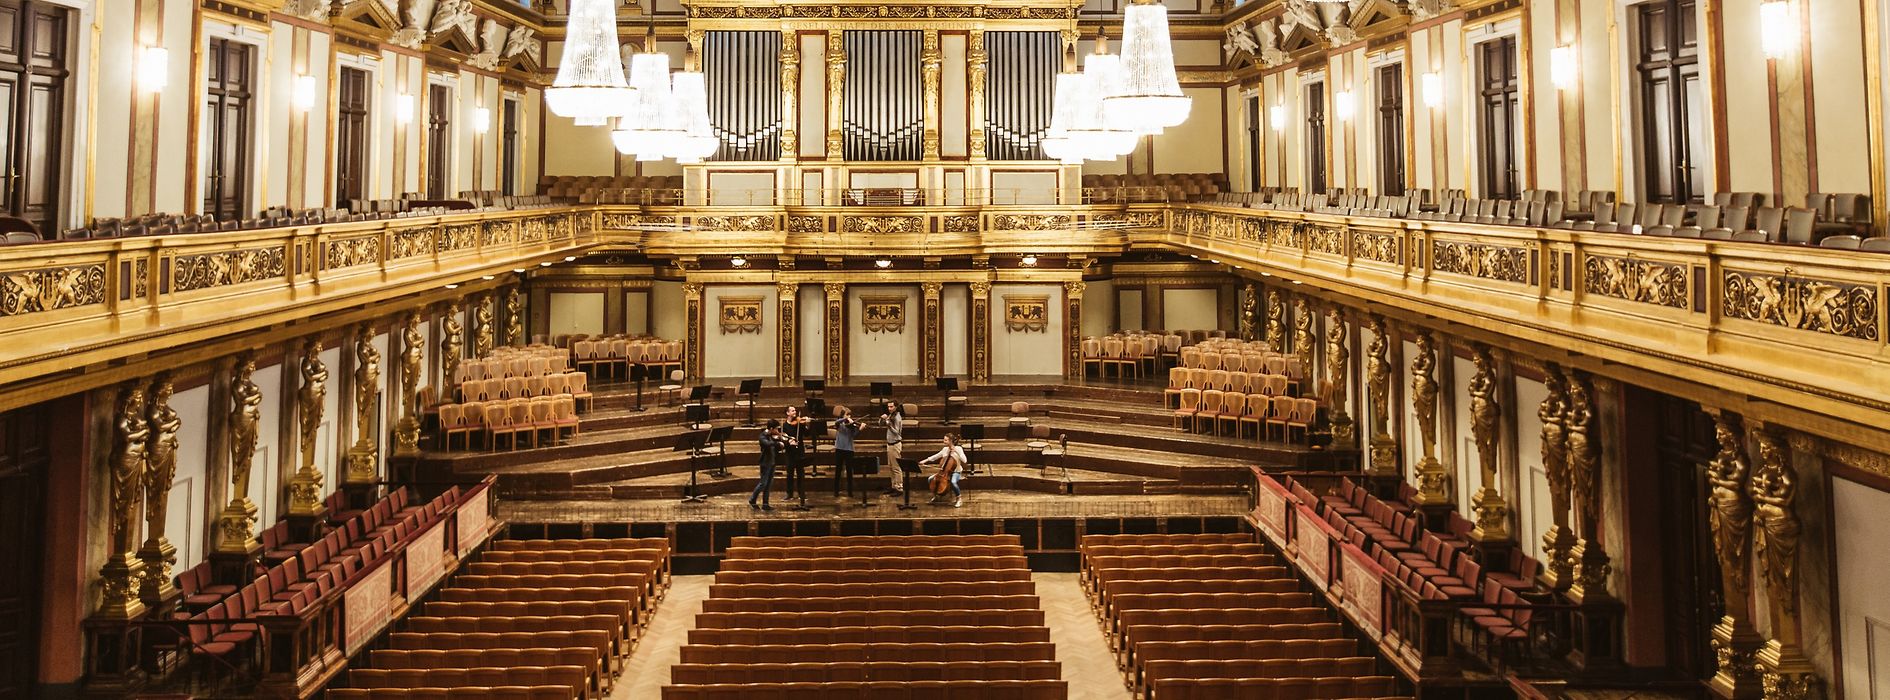 Musikverein Vienna, Great Hall (Golden Hall)